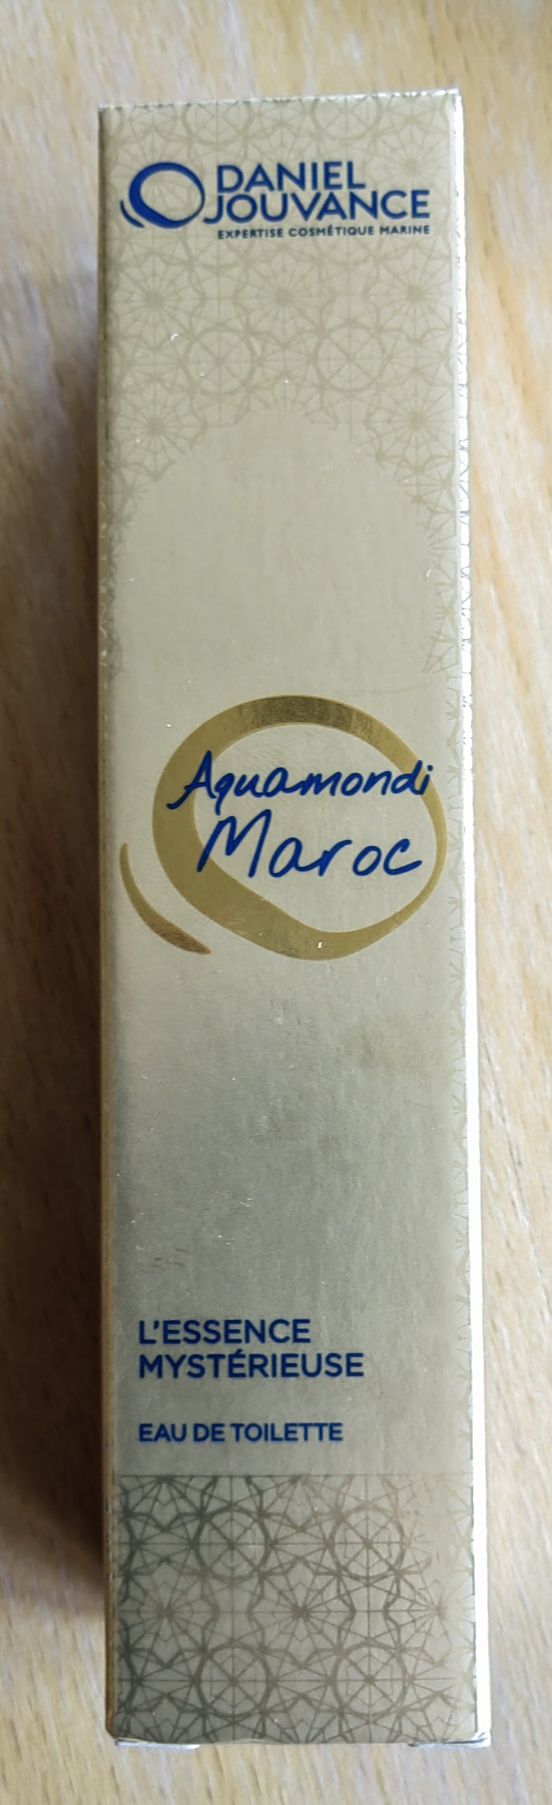 Acuamondi maroc-Daniel Jouvance